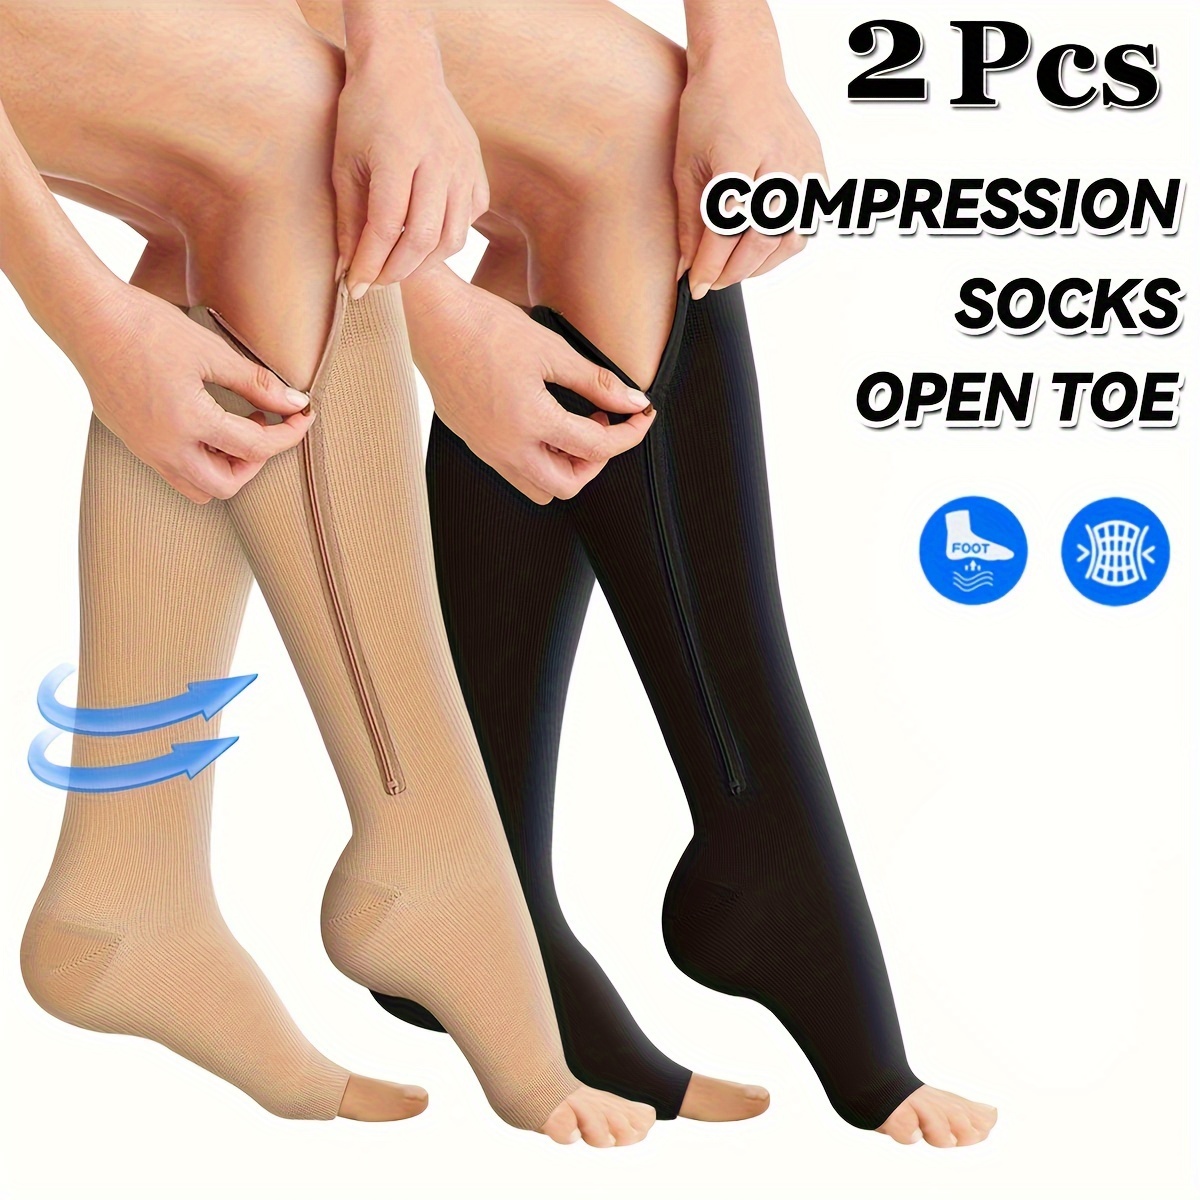 Zipper Compression Socks Open Toe Compression Stockings With Zipper